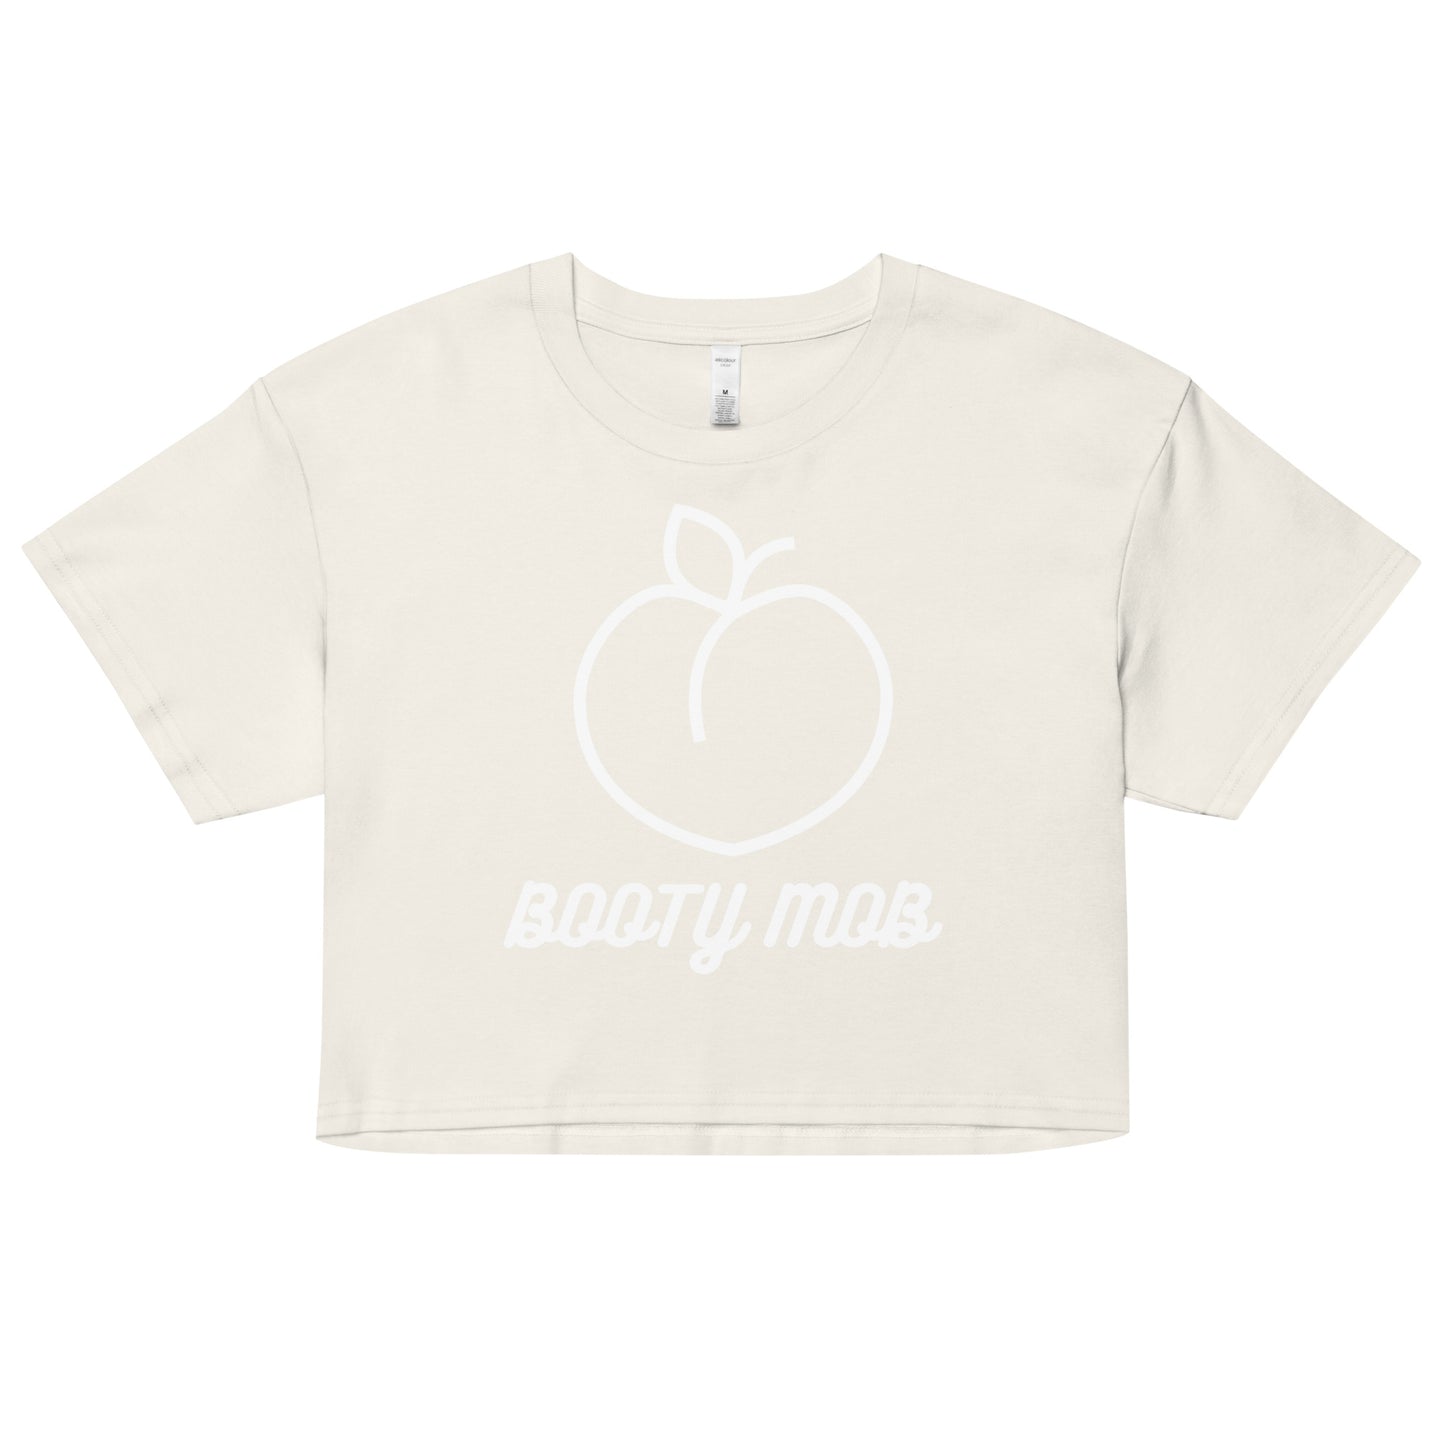 Booty Mob Peach Women’s crop top